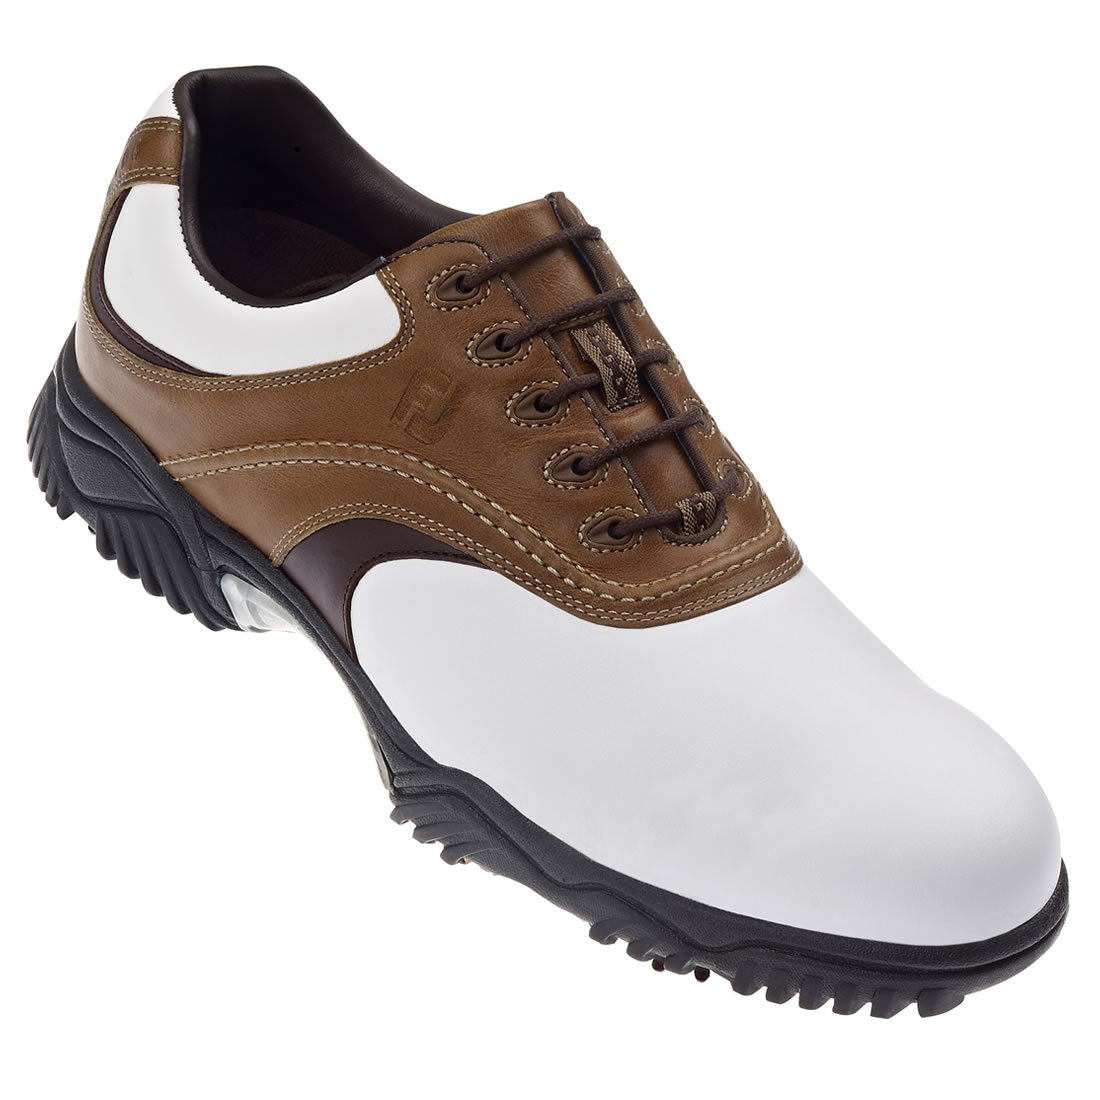 FootJoy Contour Series Golf Shoes White/Brown